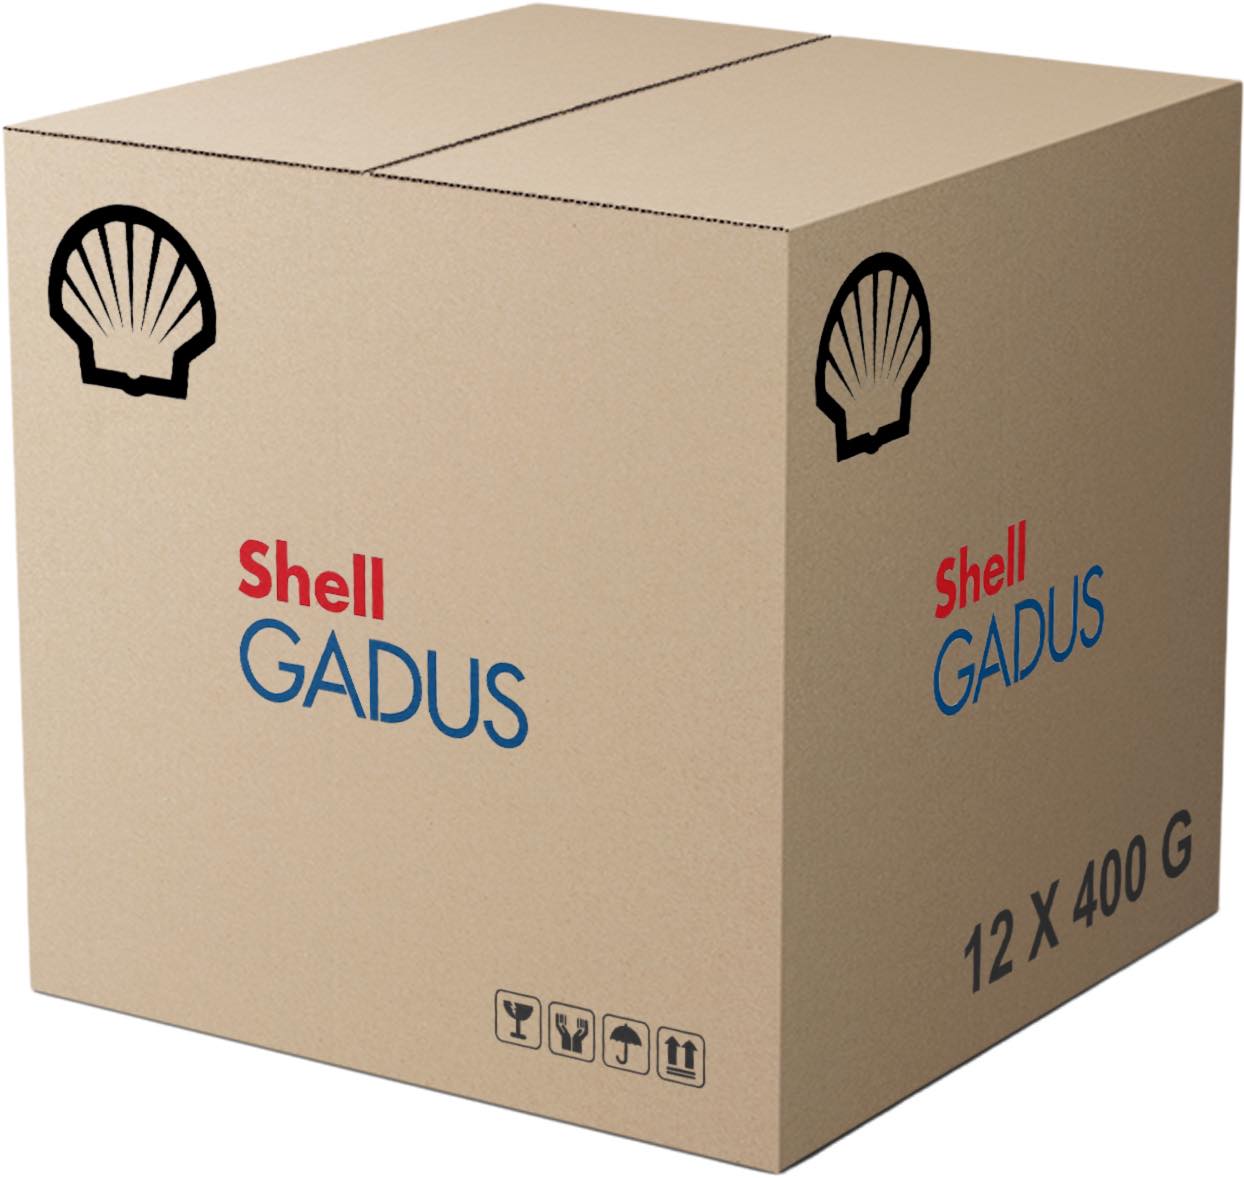 Shell Gadus S2 V220 2 12x400g (4,80kg)